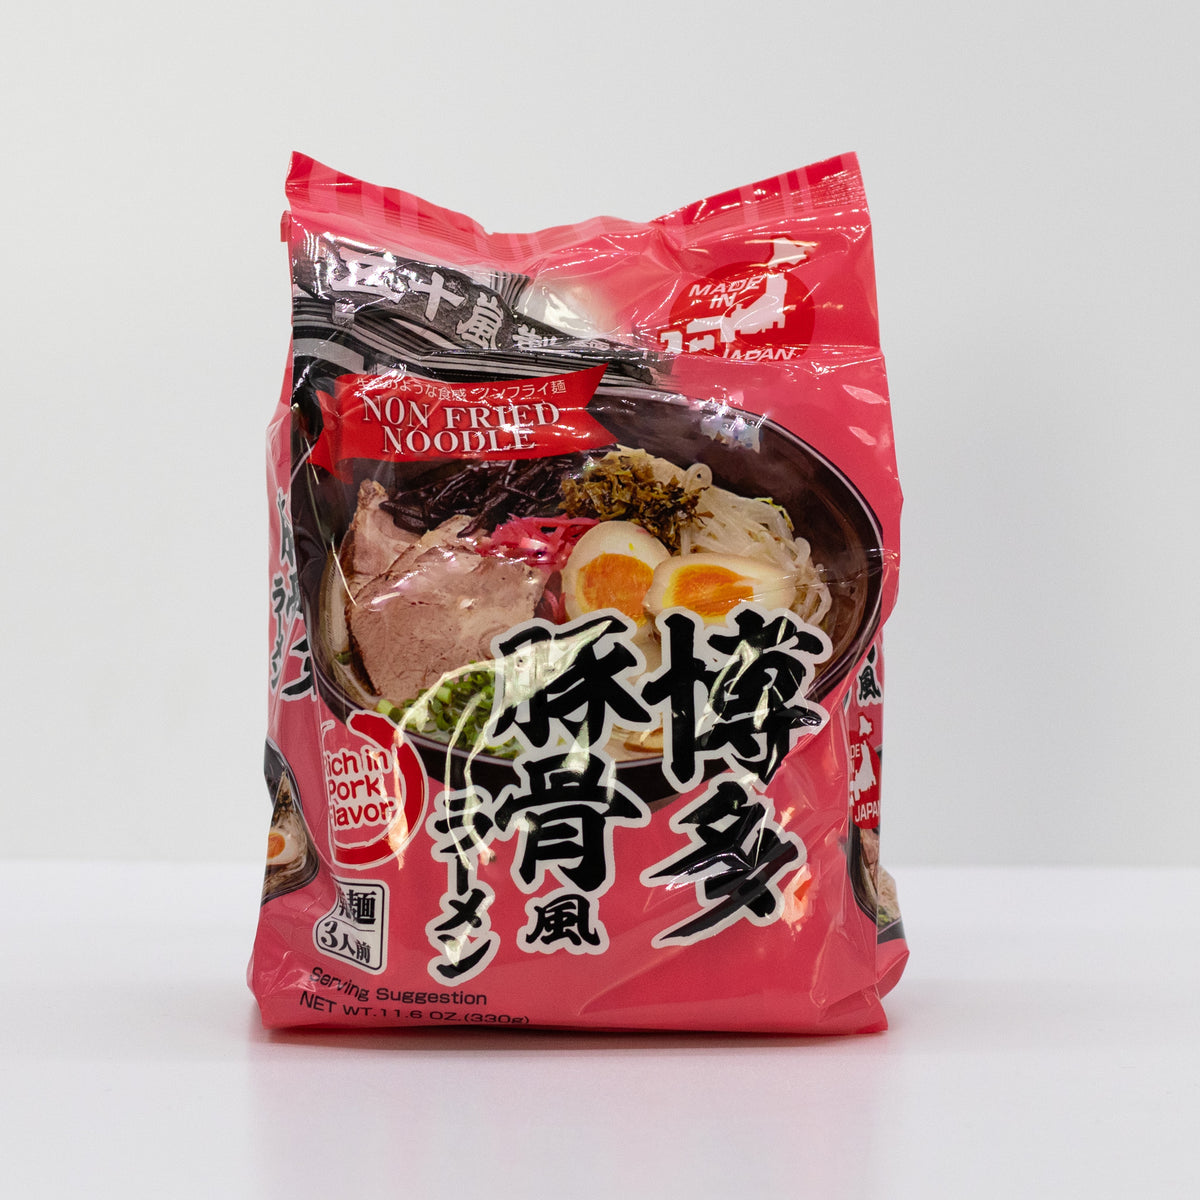 Igarashi, Tonkotsu Ramen Noodles, 330g, 3 pack